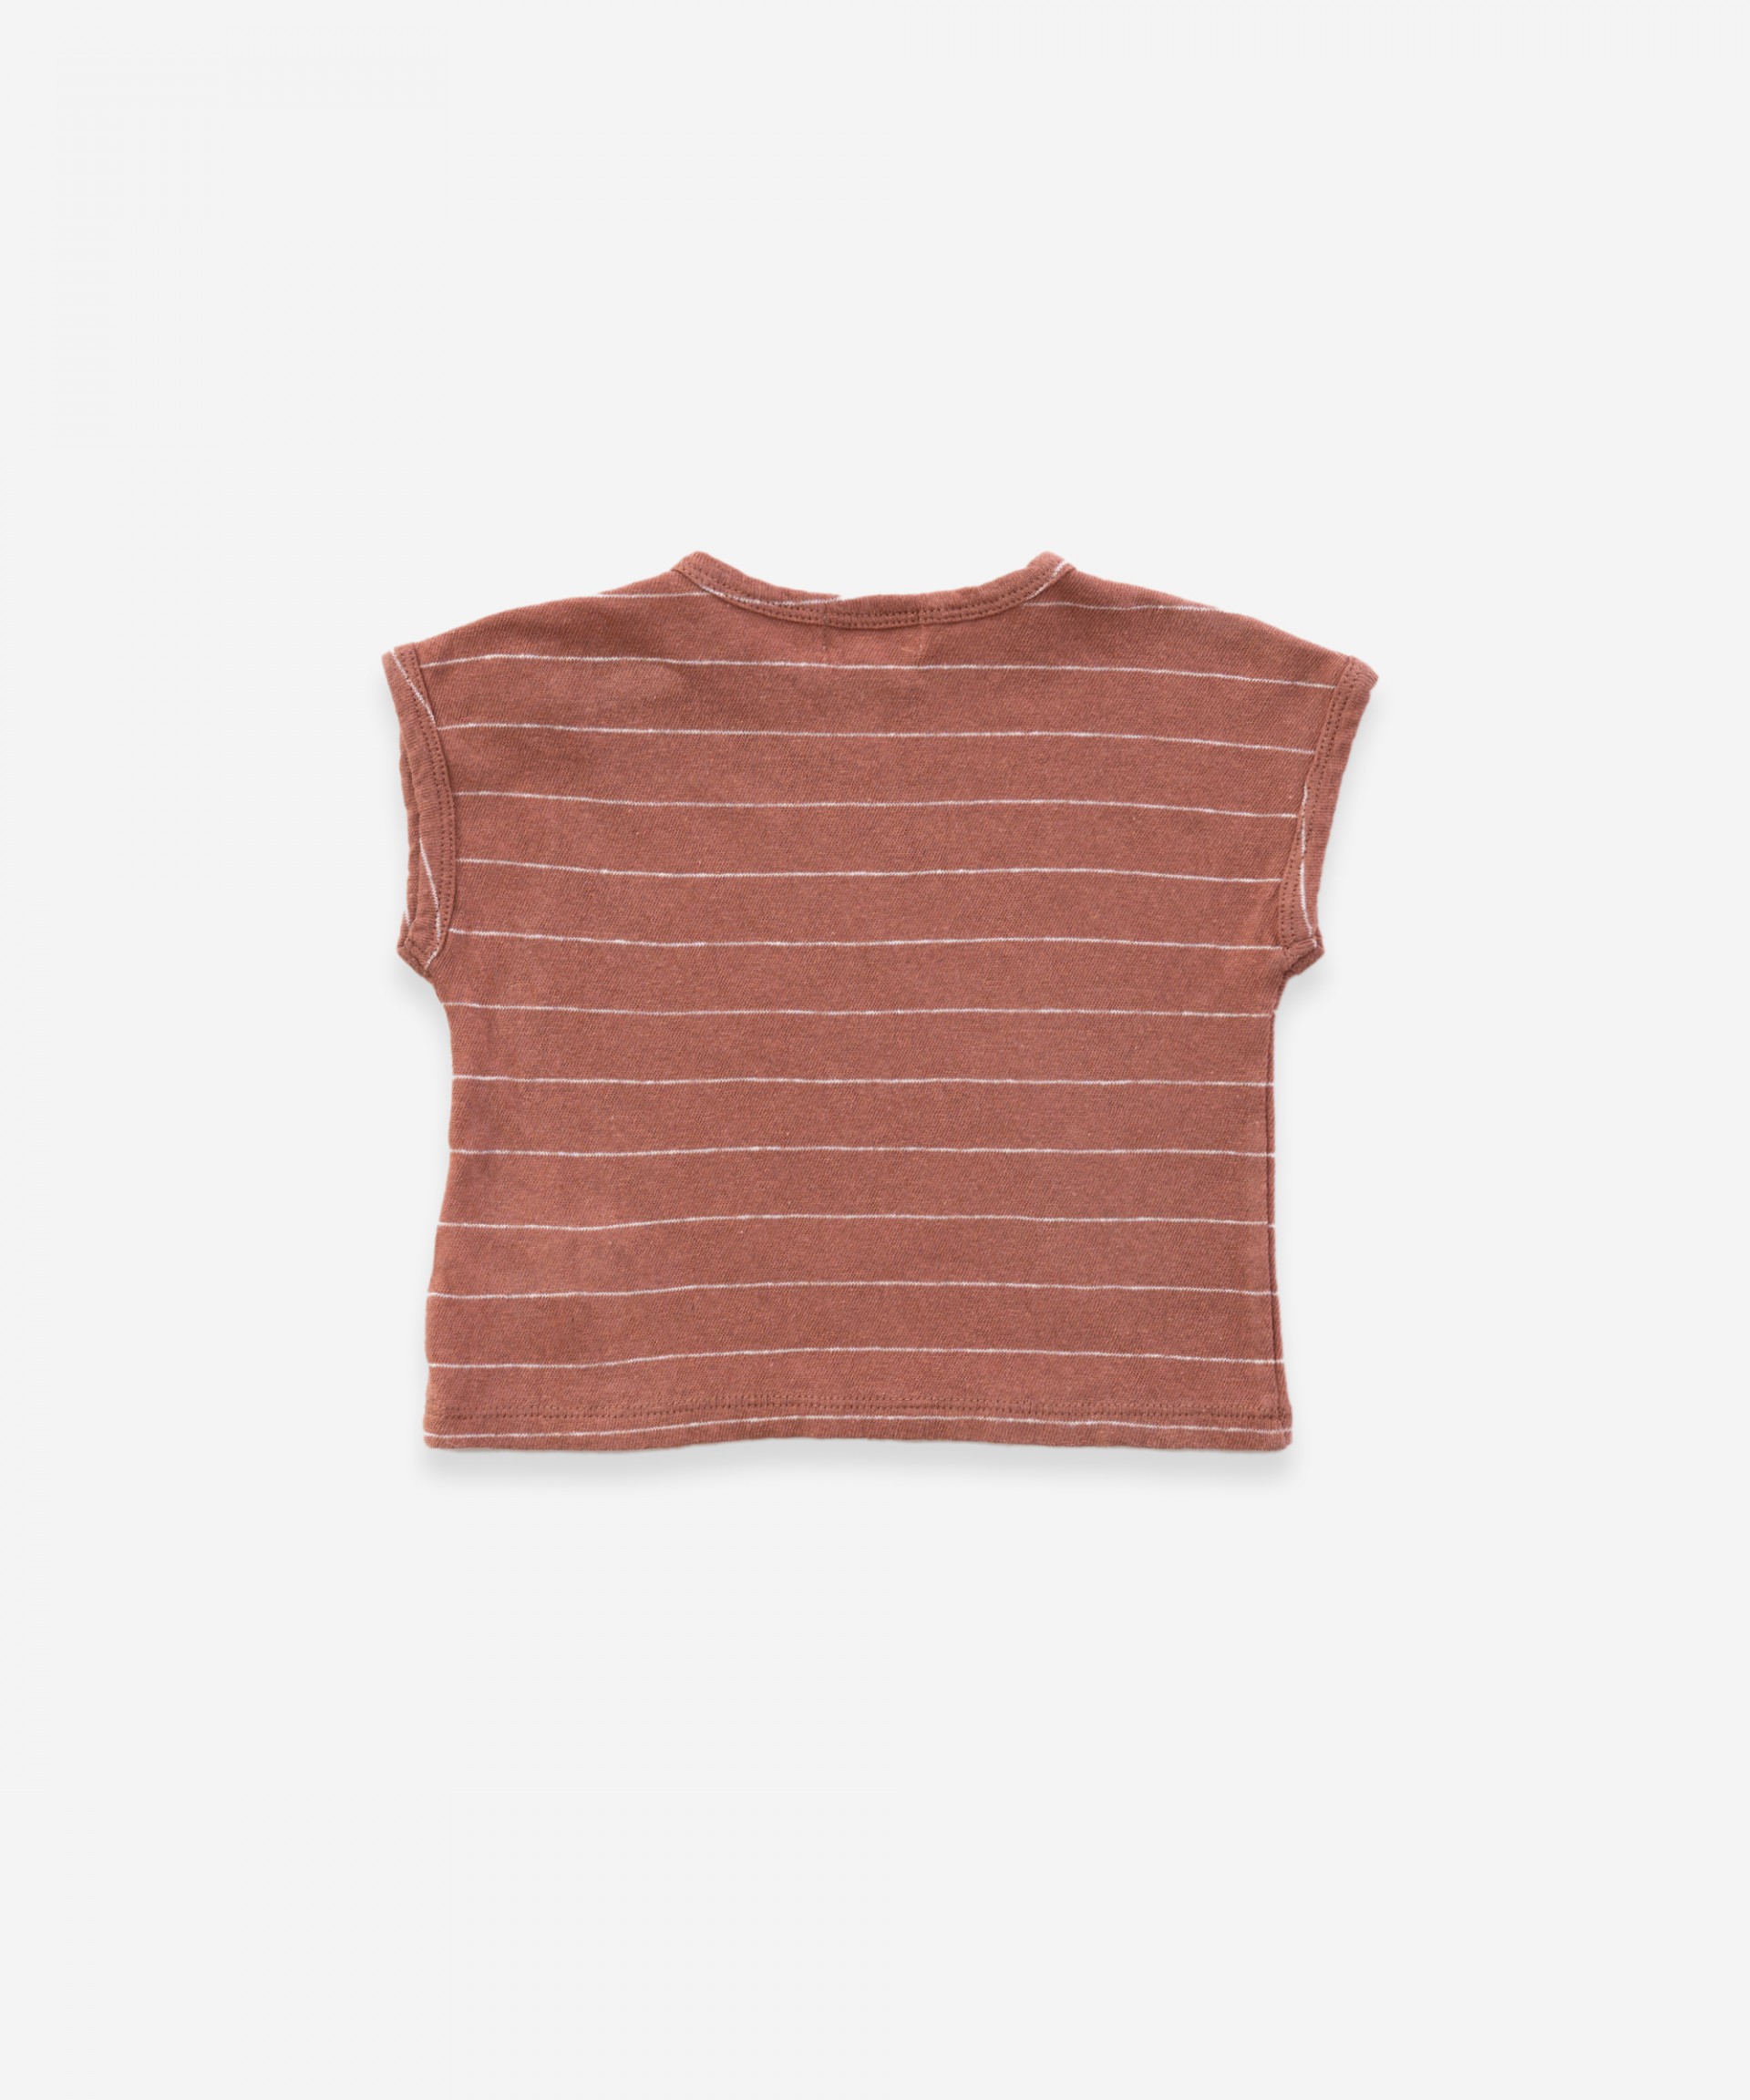 Camiseta sin mangas de algodón-lino  | Weaving